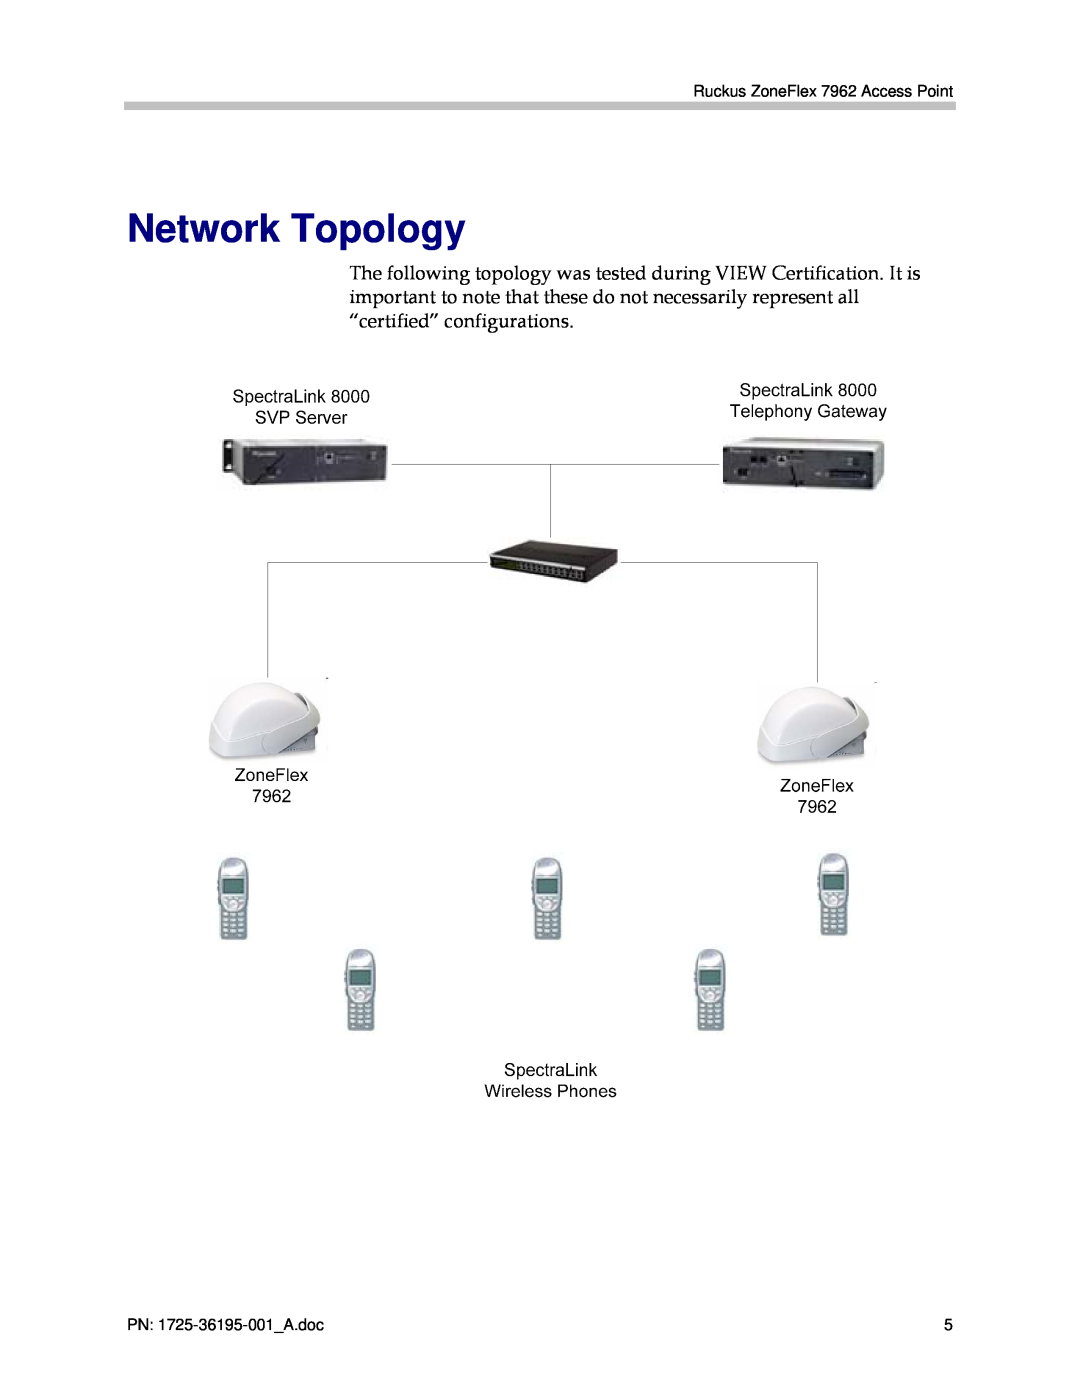 Polycom manual Network Topology, Ruckus ZoneFlex 7962 Access Point, PN 1725-36195-001A.doc 